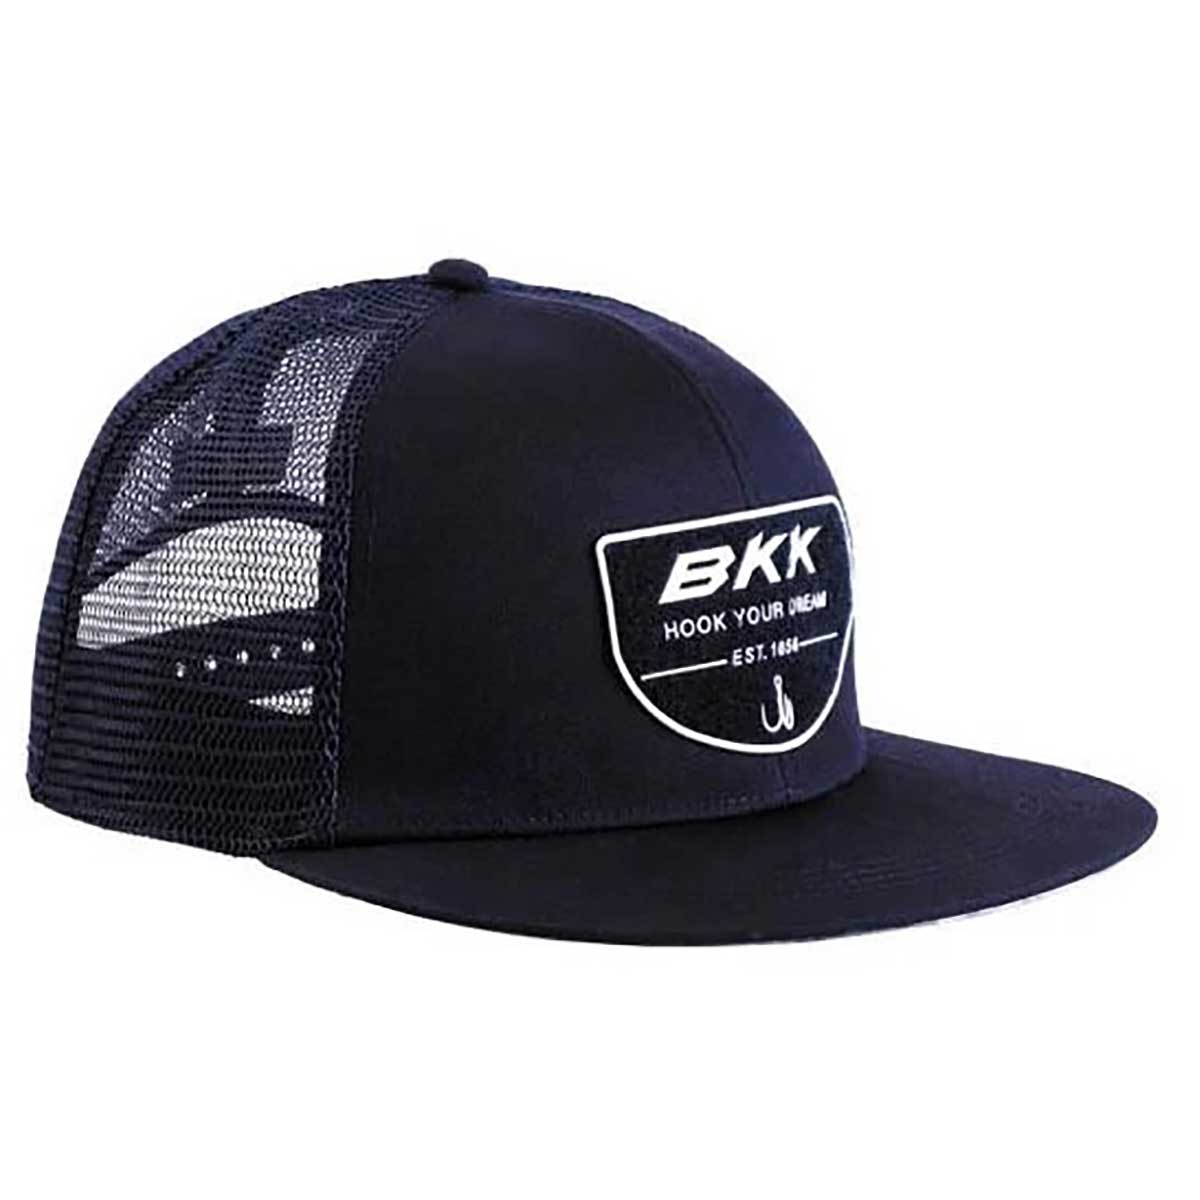 BKK Legacy Snapback Blue Şapka BKK Legacy Snapback Hat, siperli şapka şe